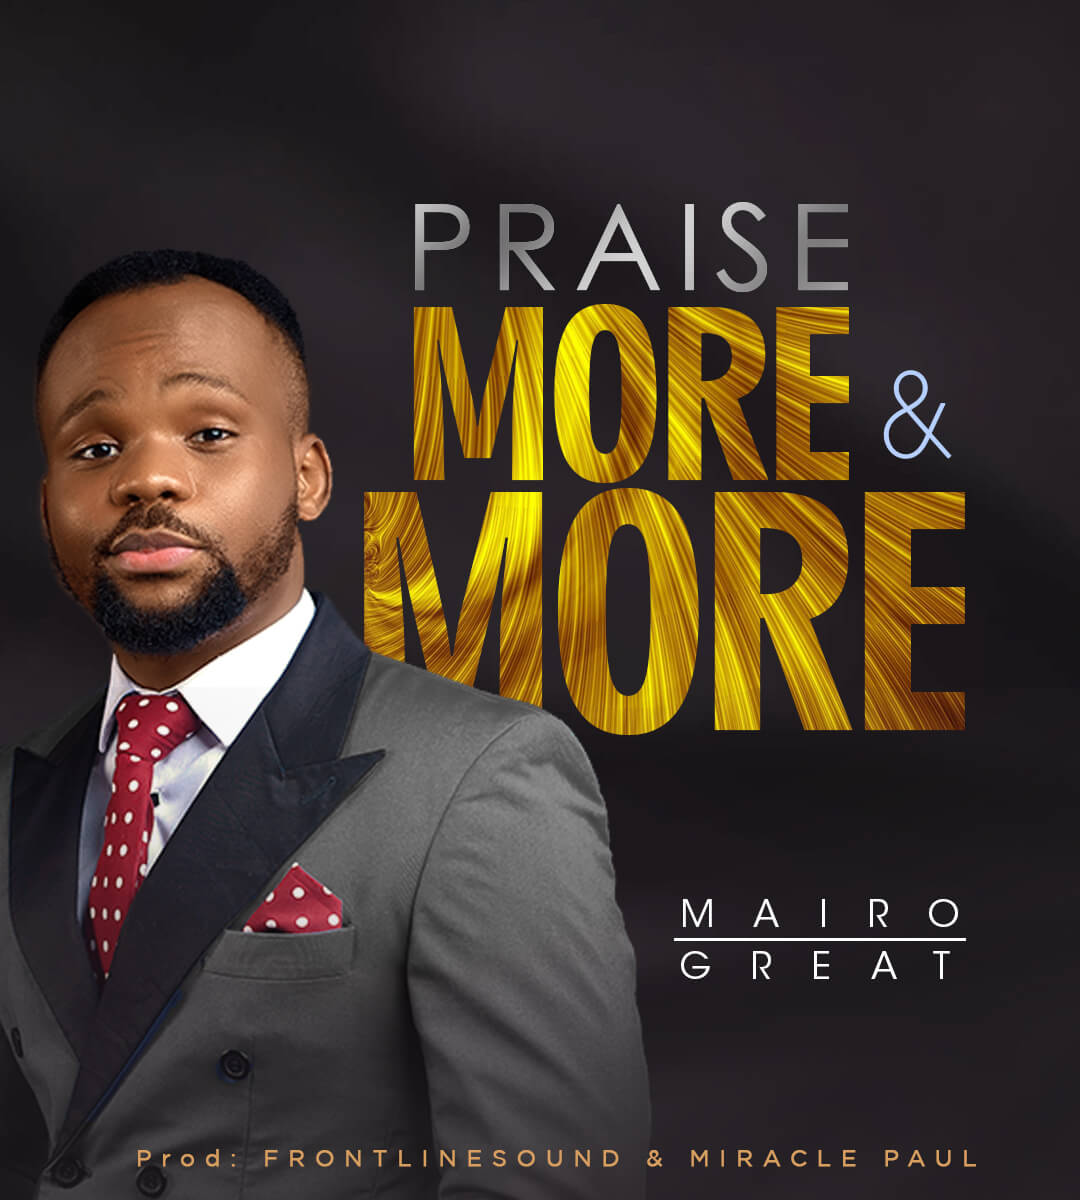 Mairo-Great-Praise-More-More